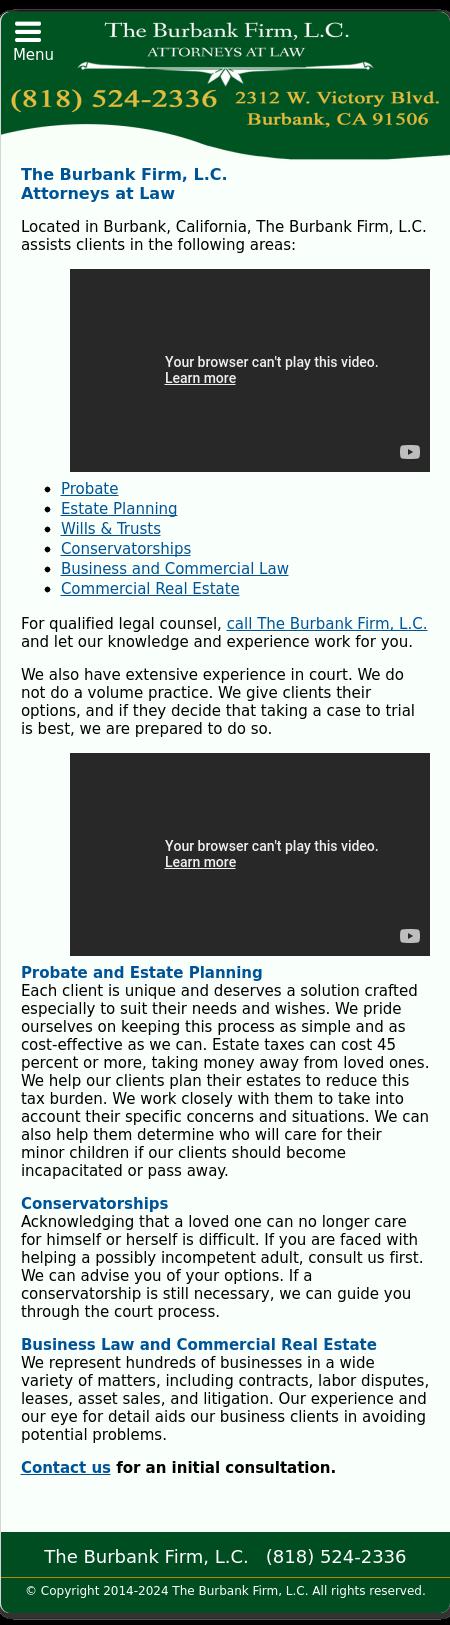 The Burbank Firm L.C. - Burbank CA Lawyers